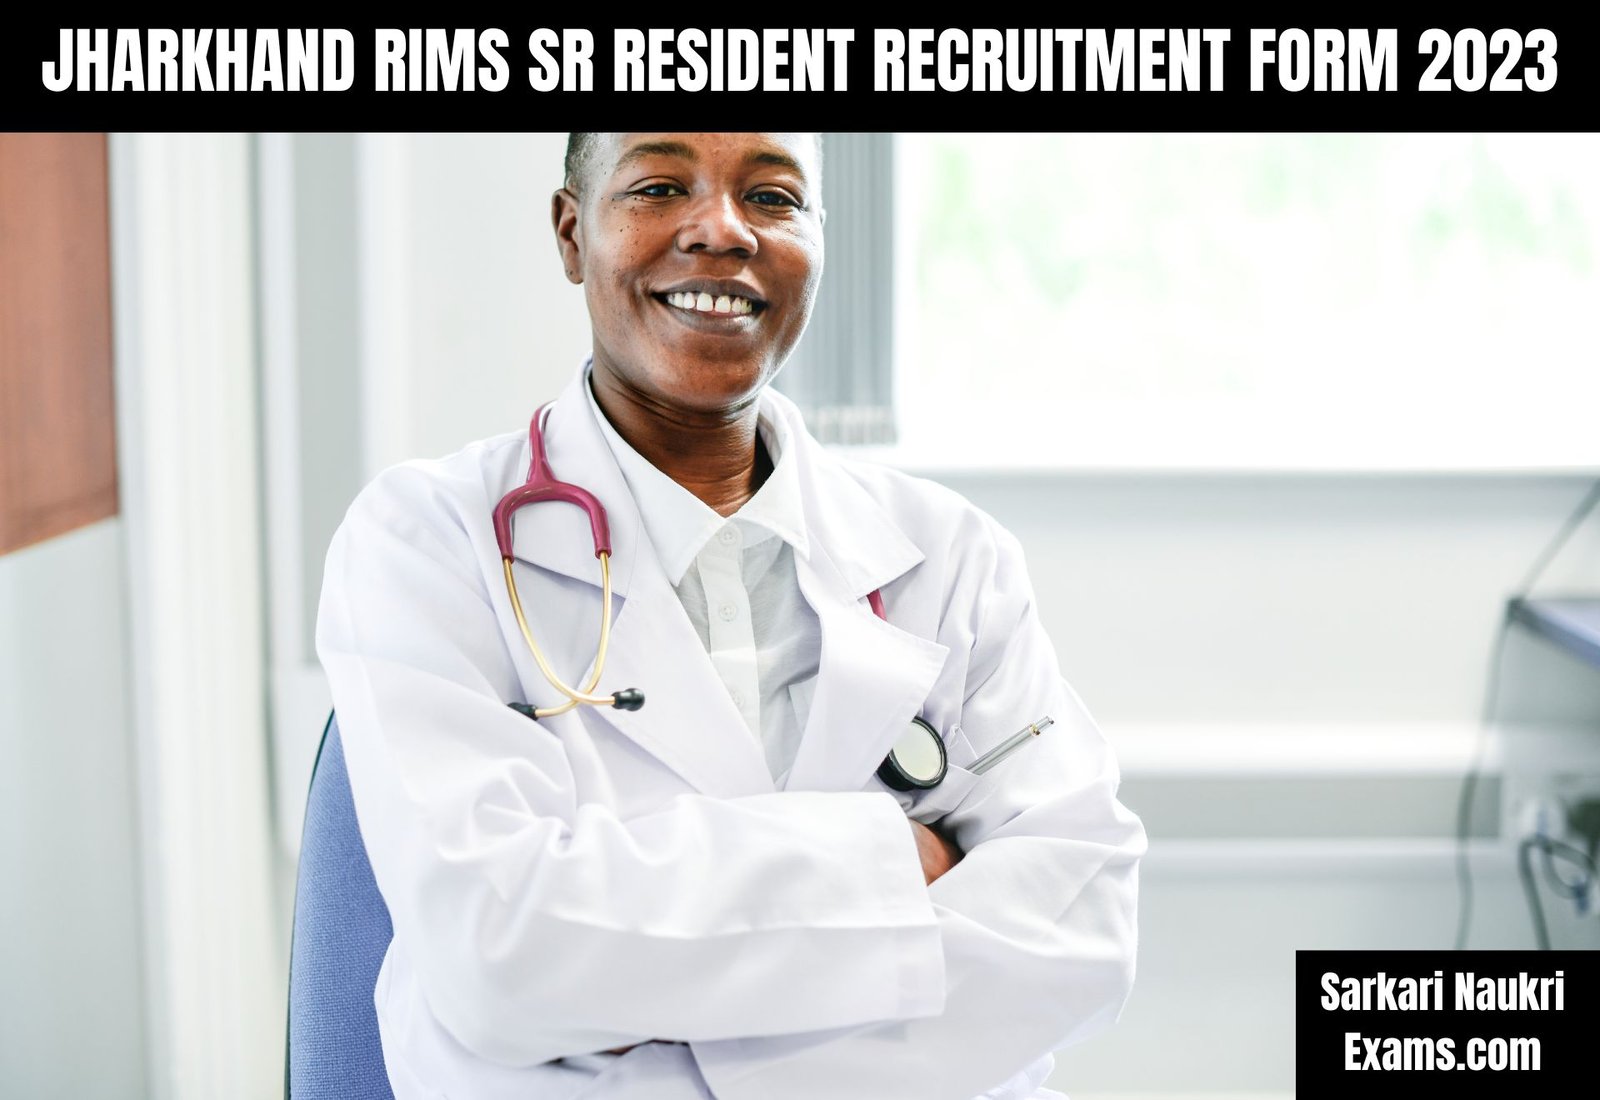 Jharkhand RIMS Sr Resident Recruitment Form 2023 | Interview Based Job